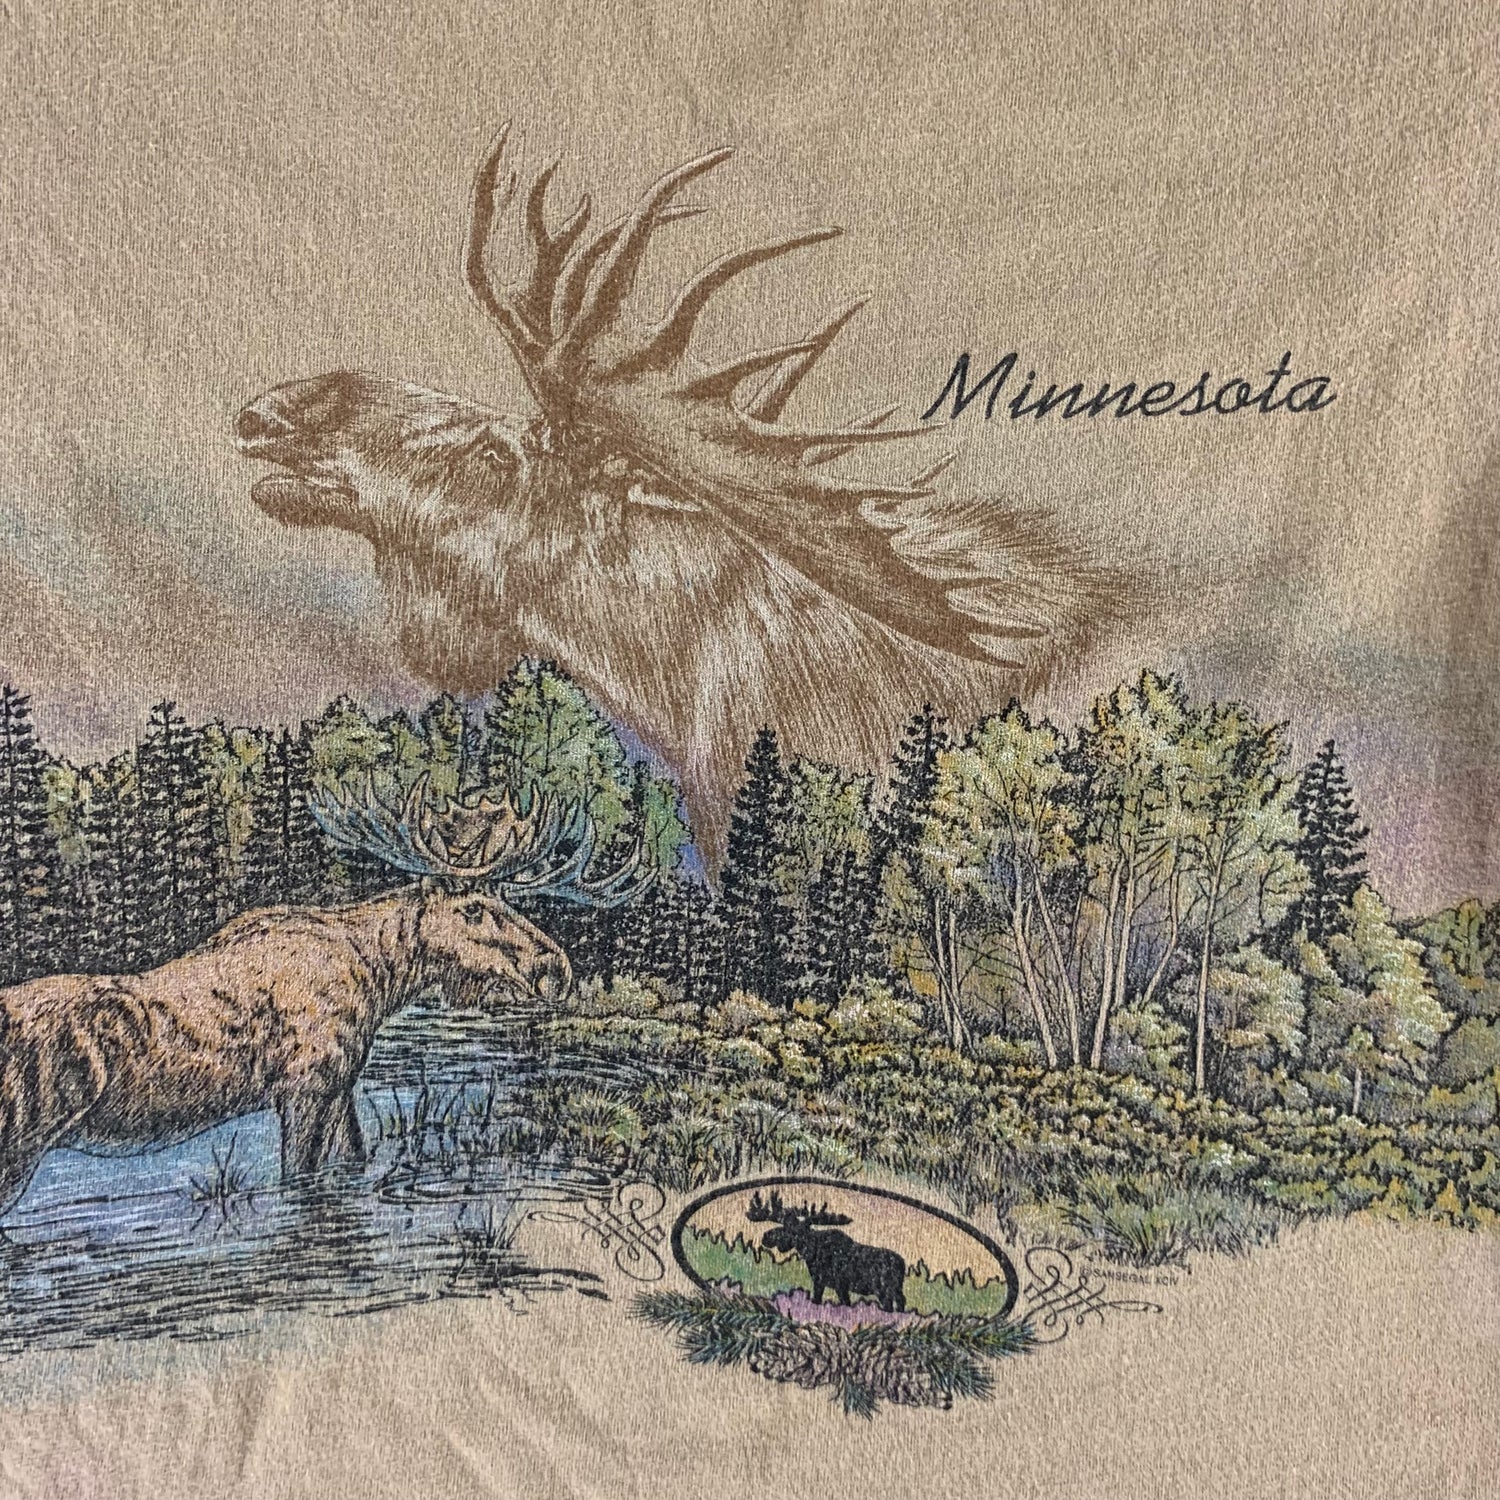 Vintage 1990s Minnesota T-shirt size Large